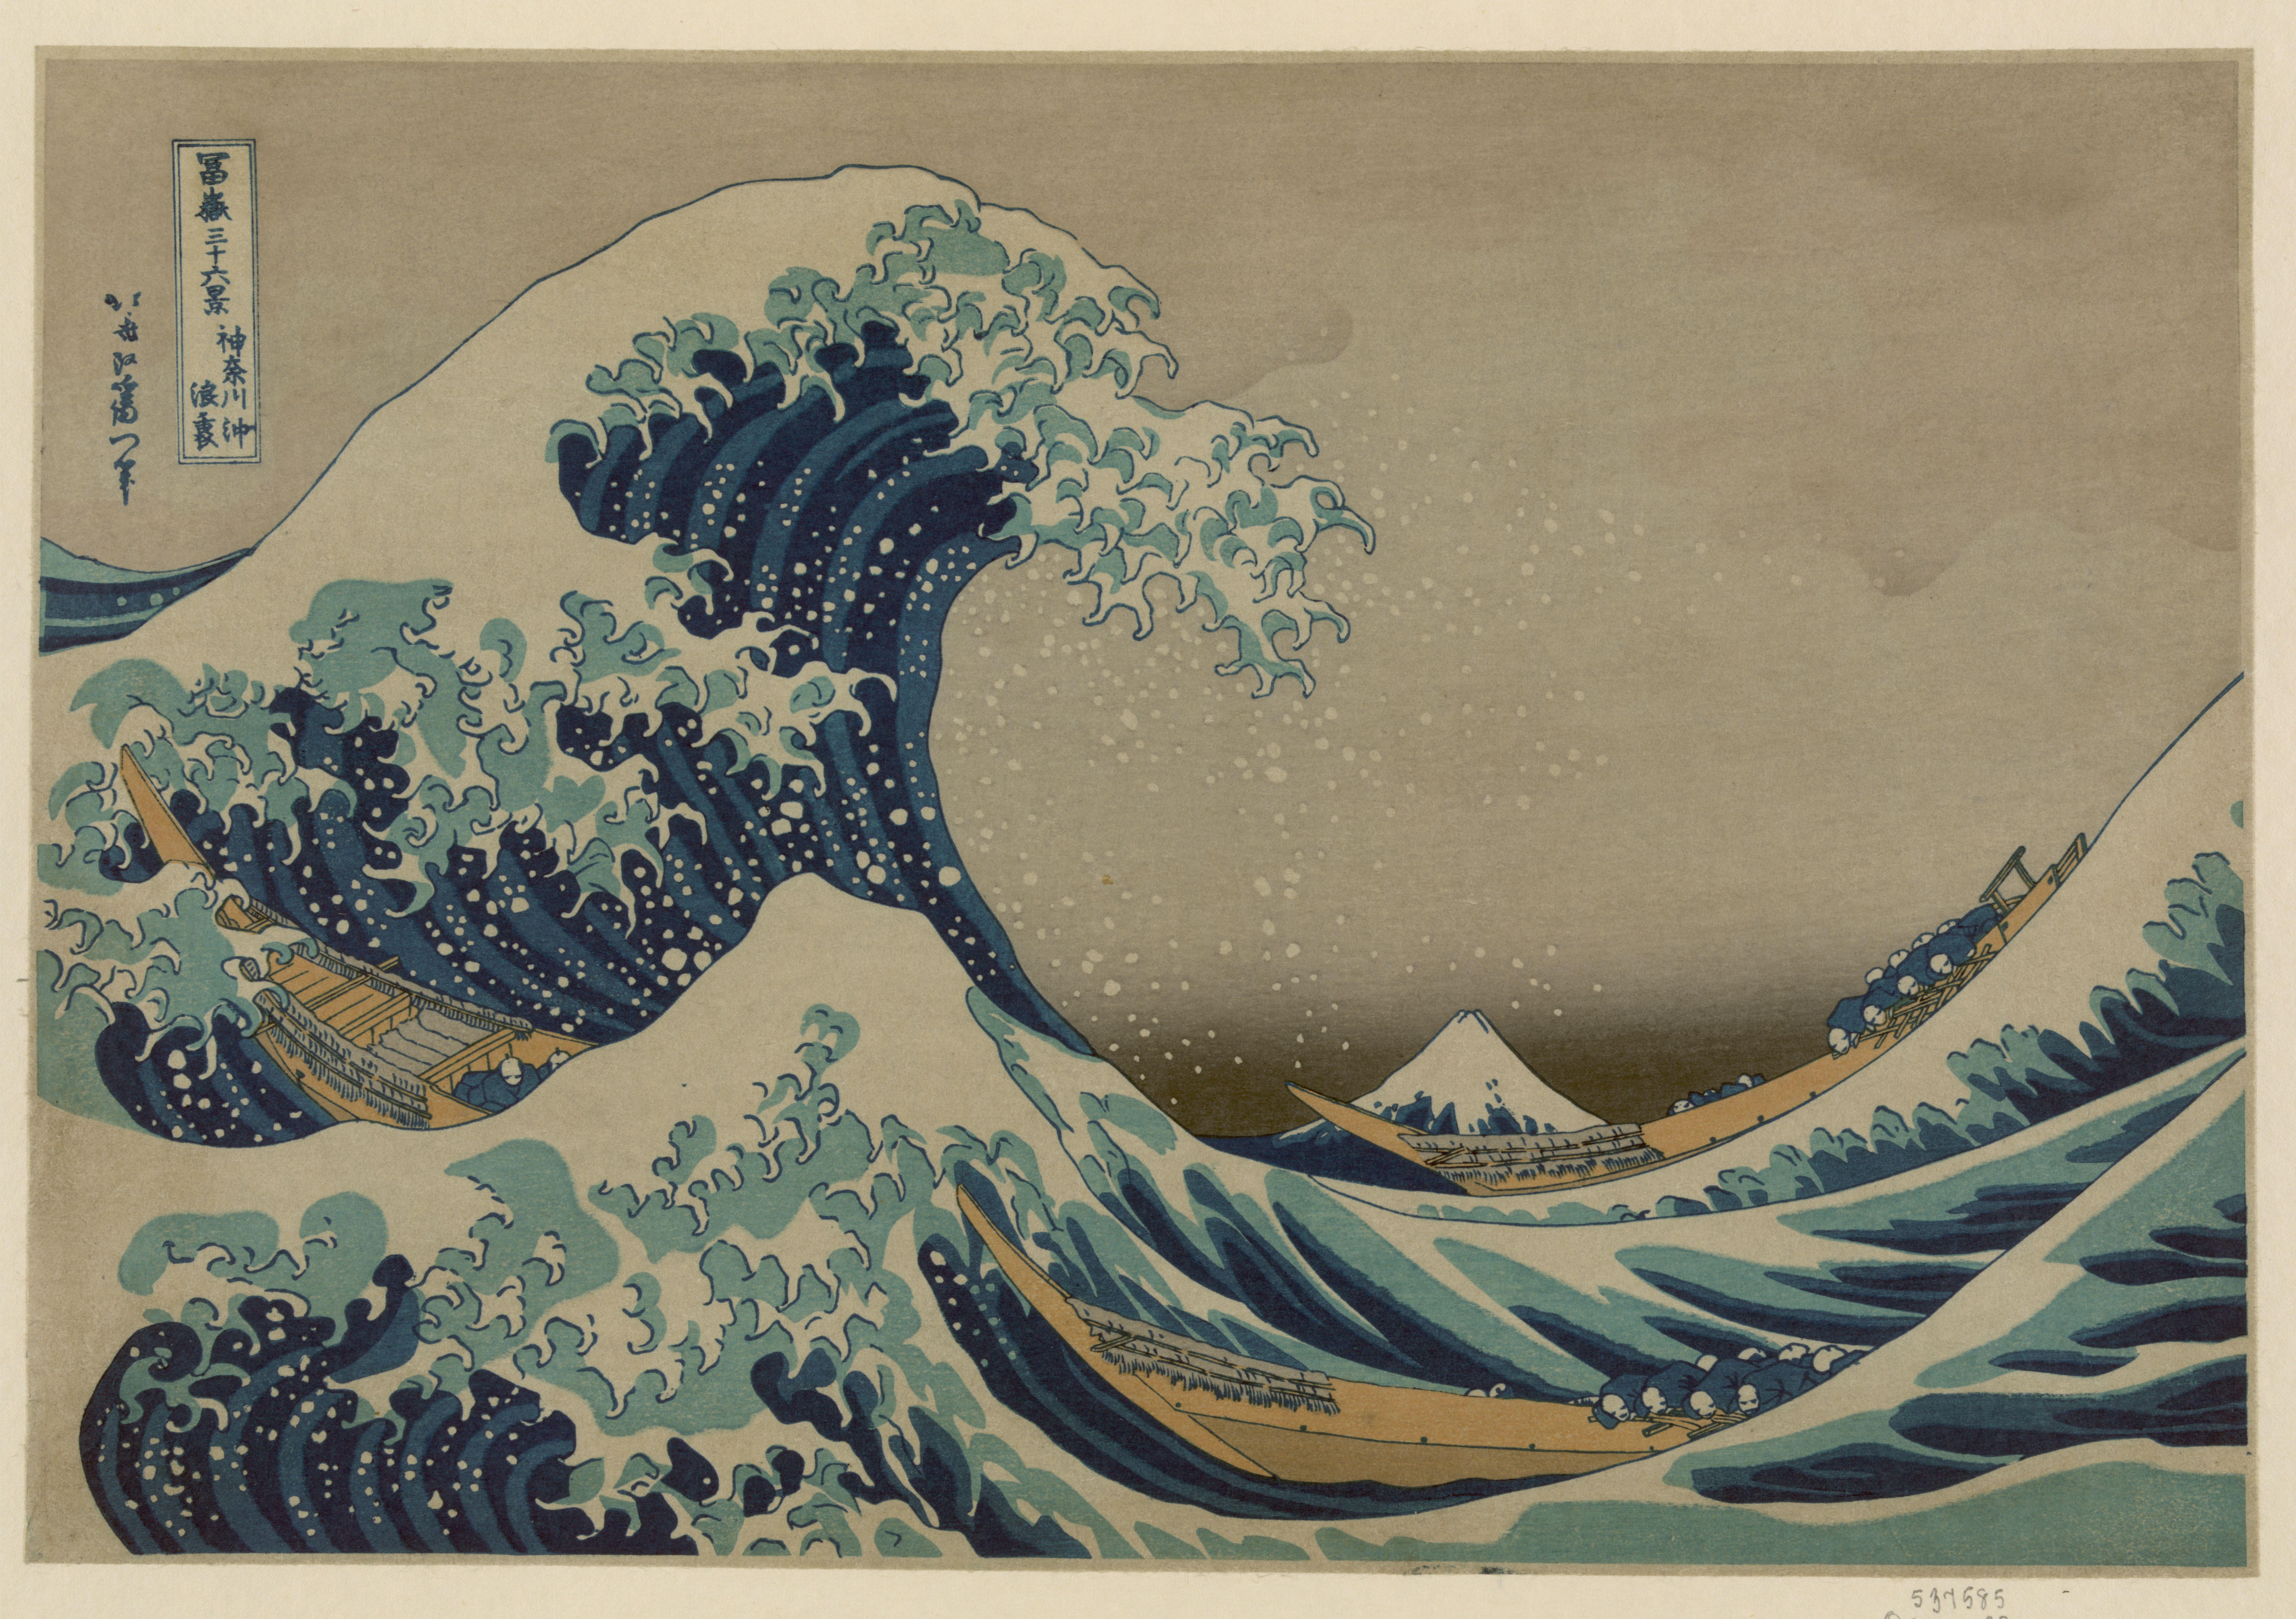 The Great Wave of Kanagawa Logo - File:Great Wave off Kanagawa.jpg - Wikimedia Commons